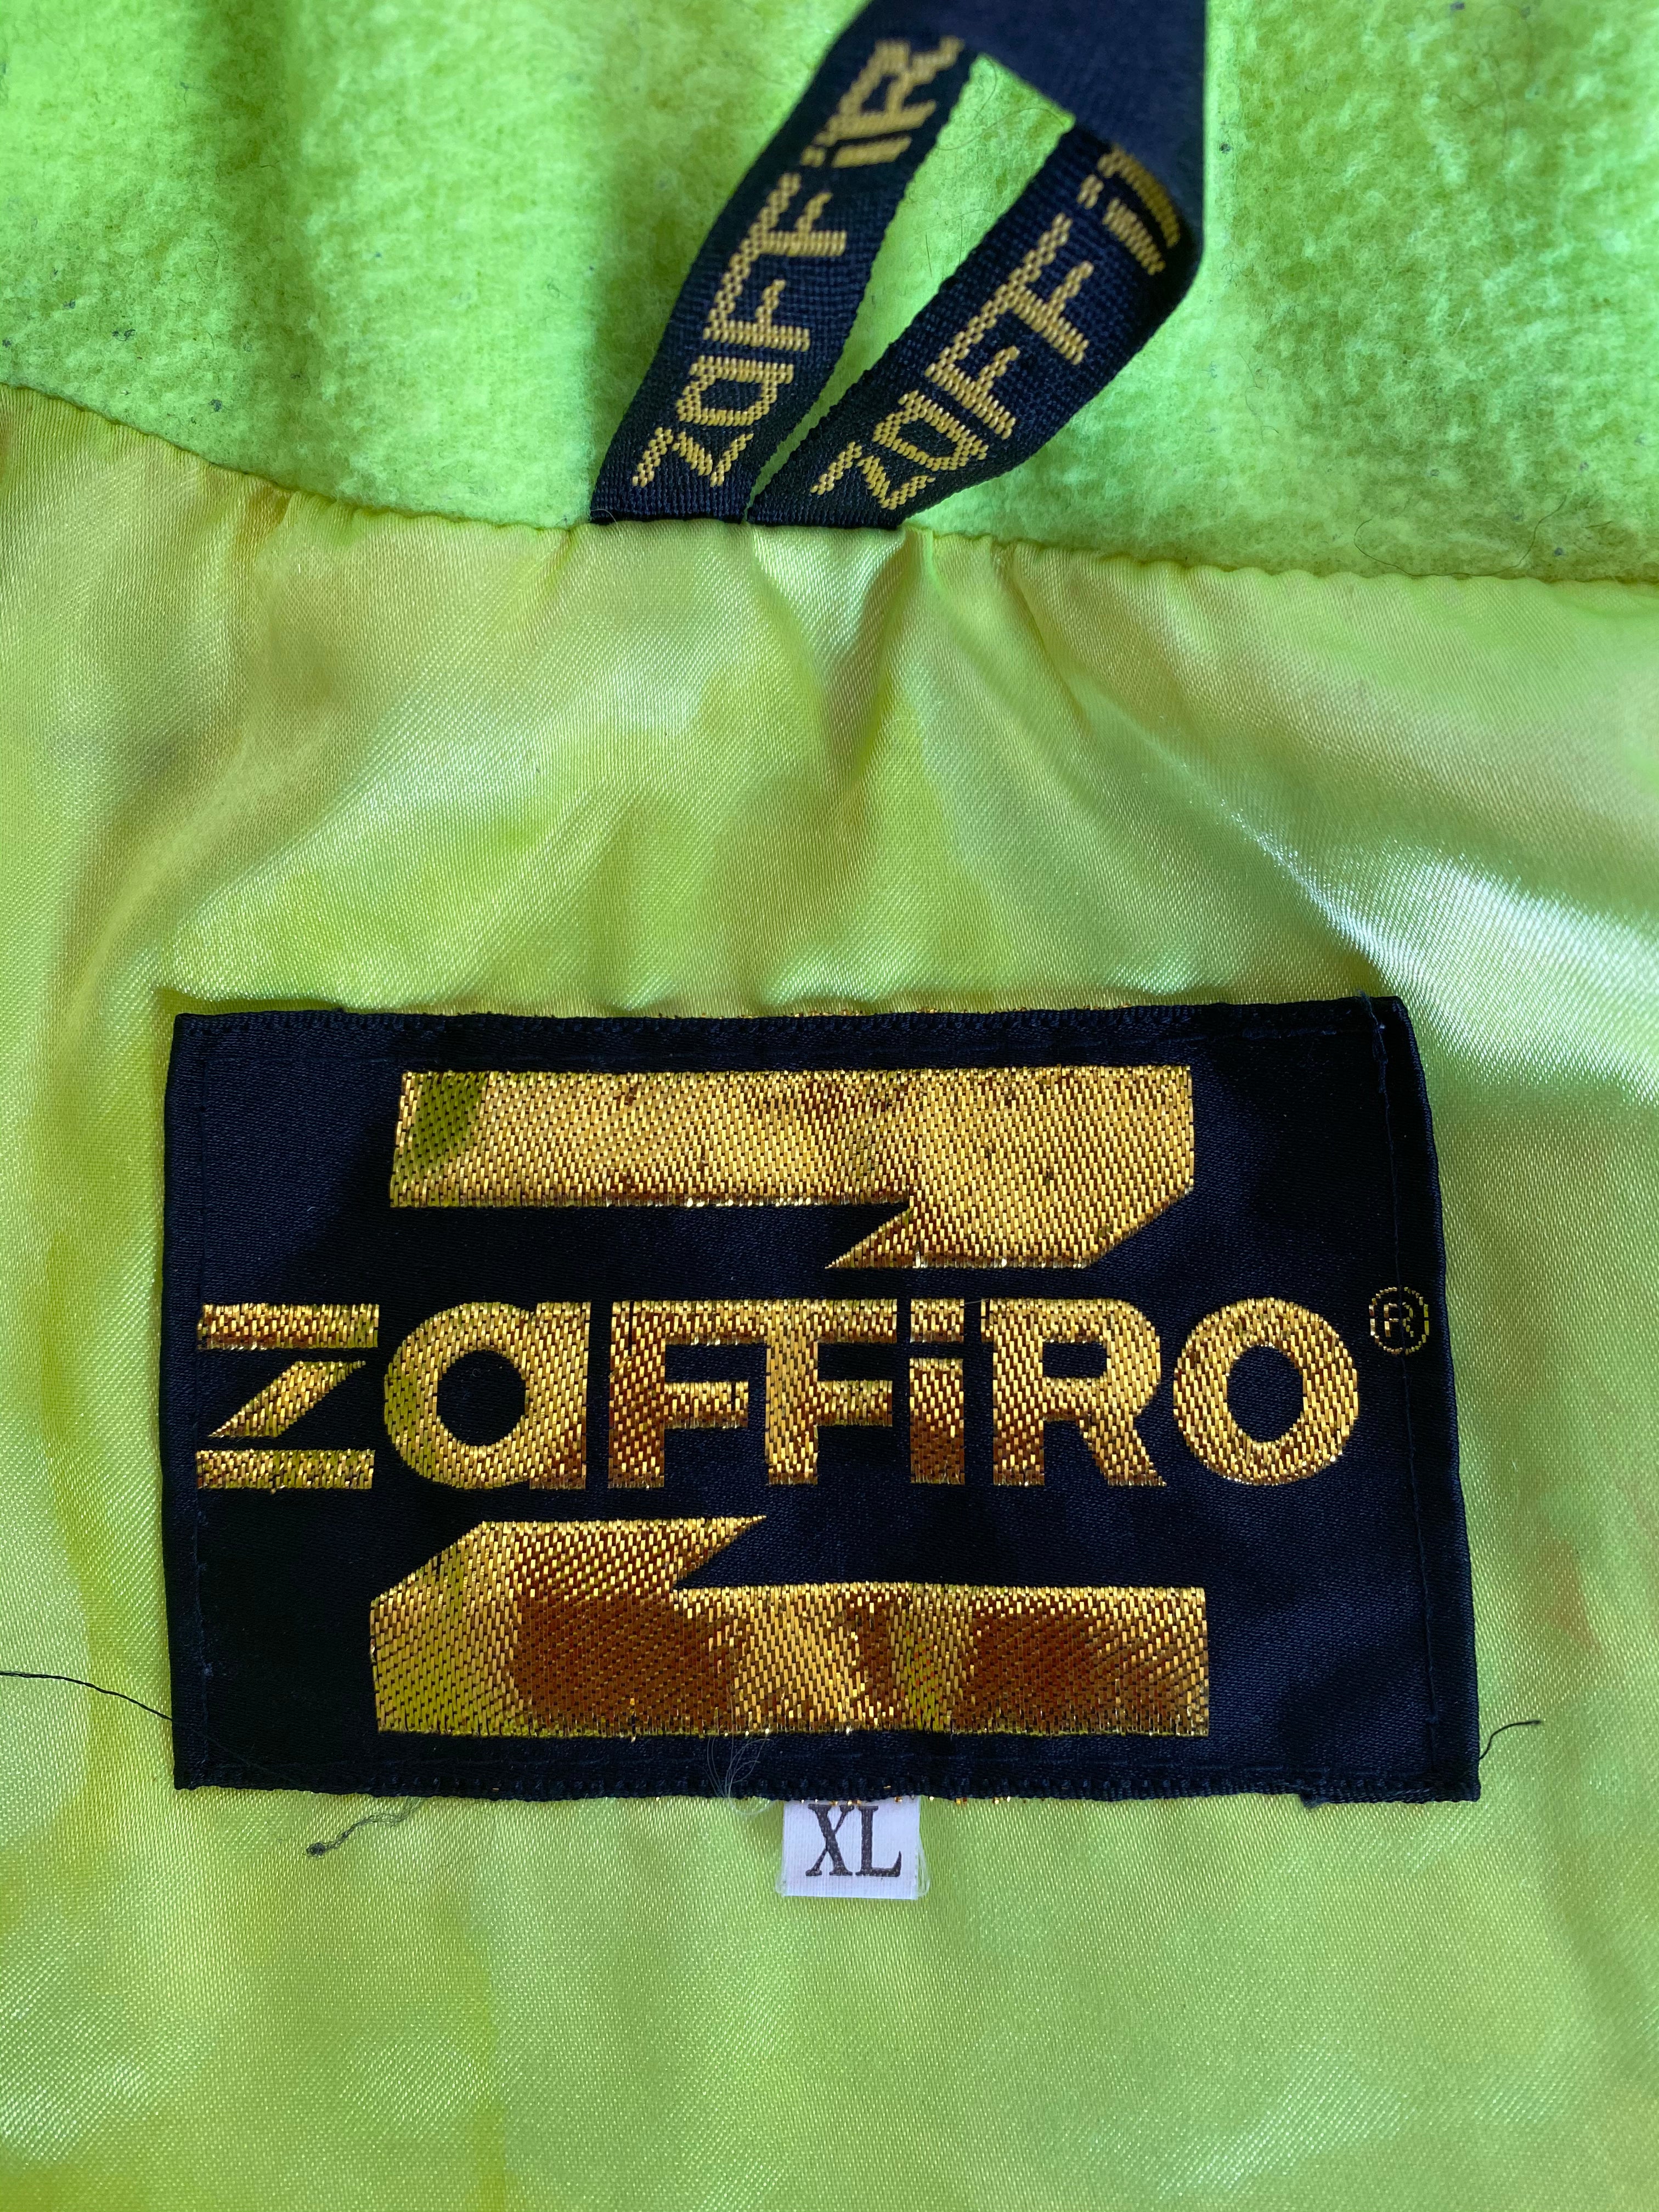 Vintage Zaffiro Blue, Silver, Gold & Fluorescent Yellow Jacket internal label